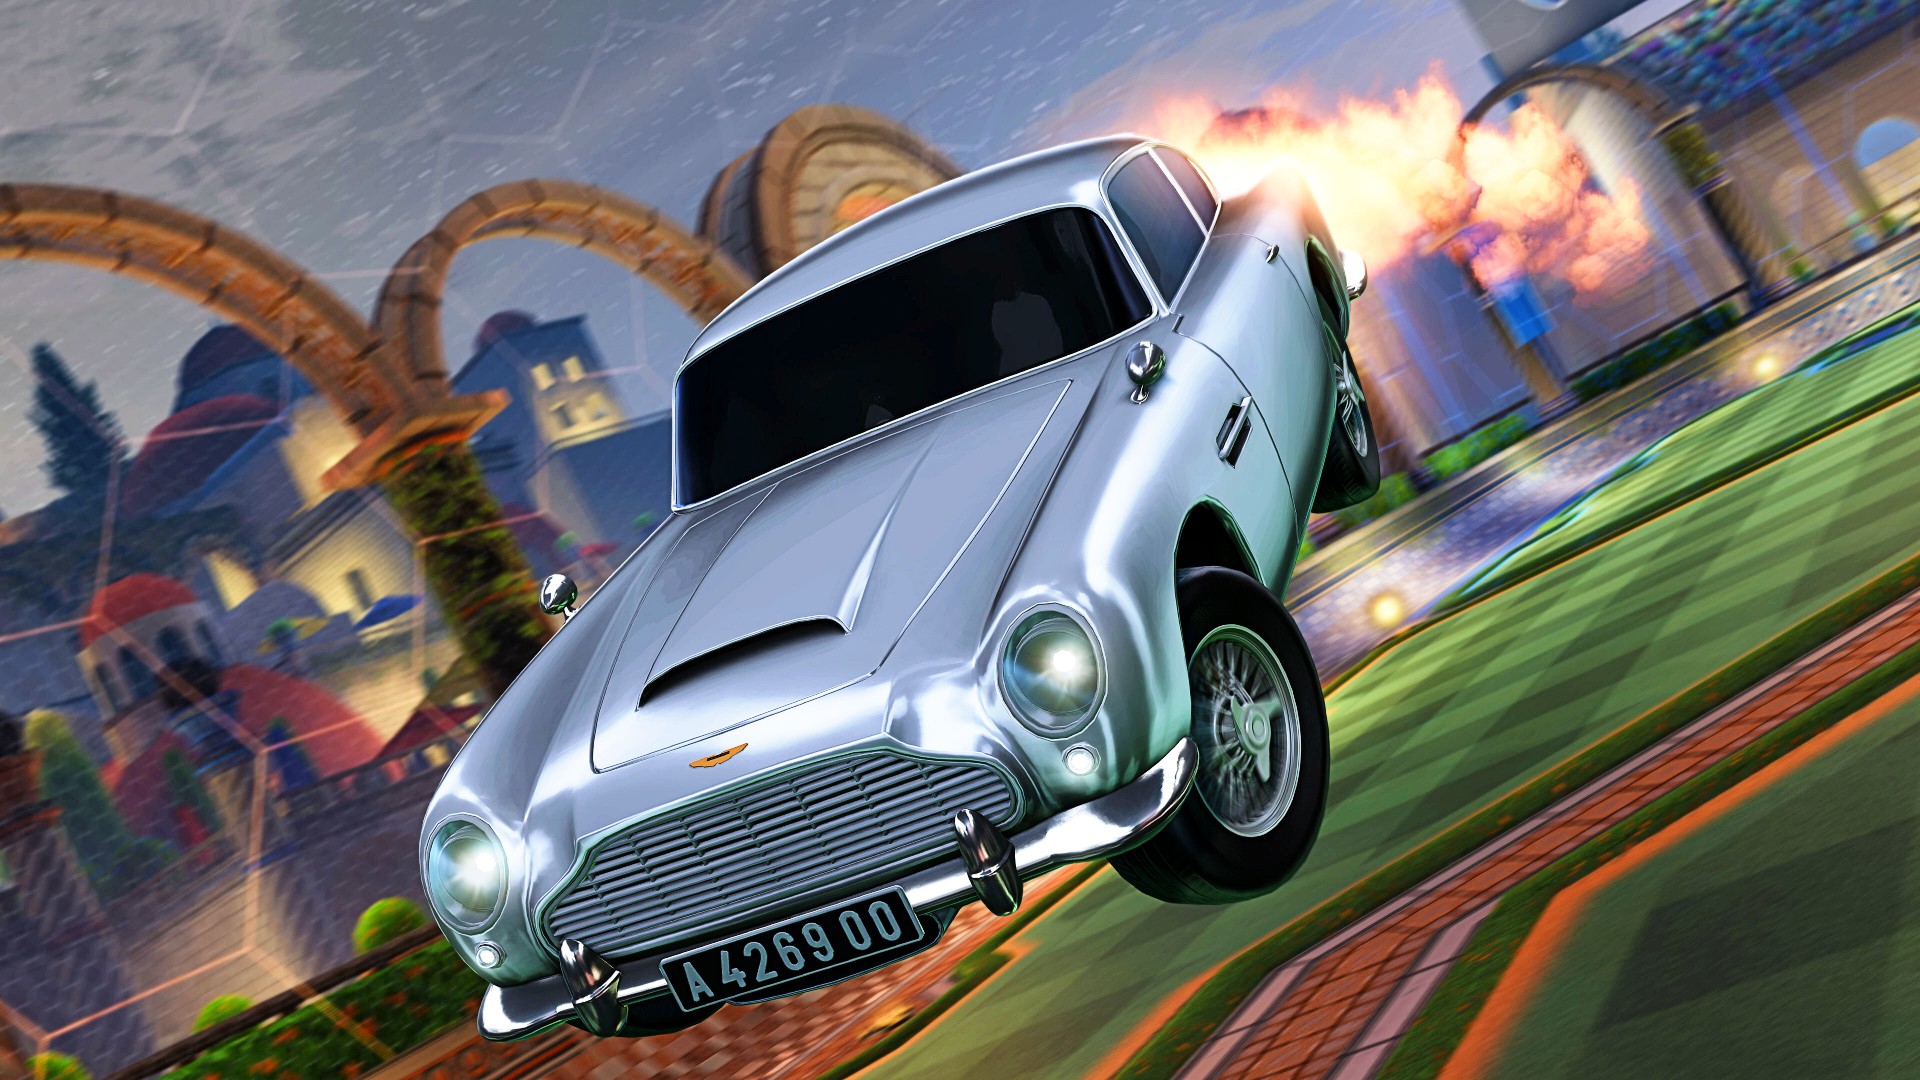 Rocket League កំពុងទទួលបាន Aston Martin របស់ James Bond